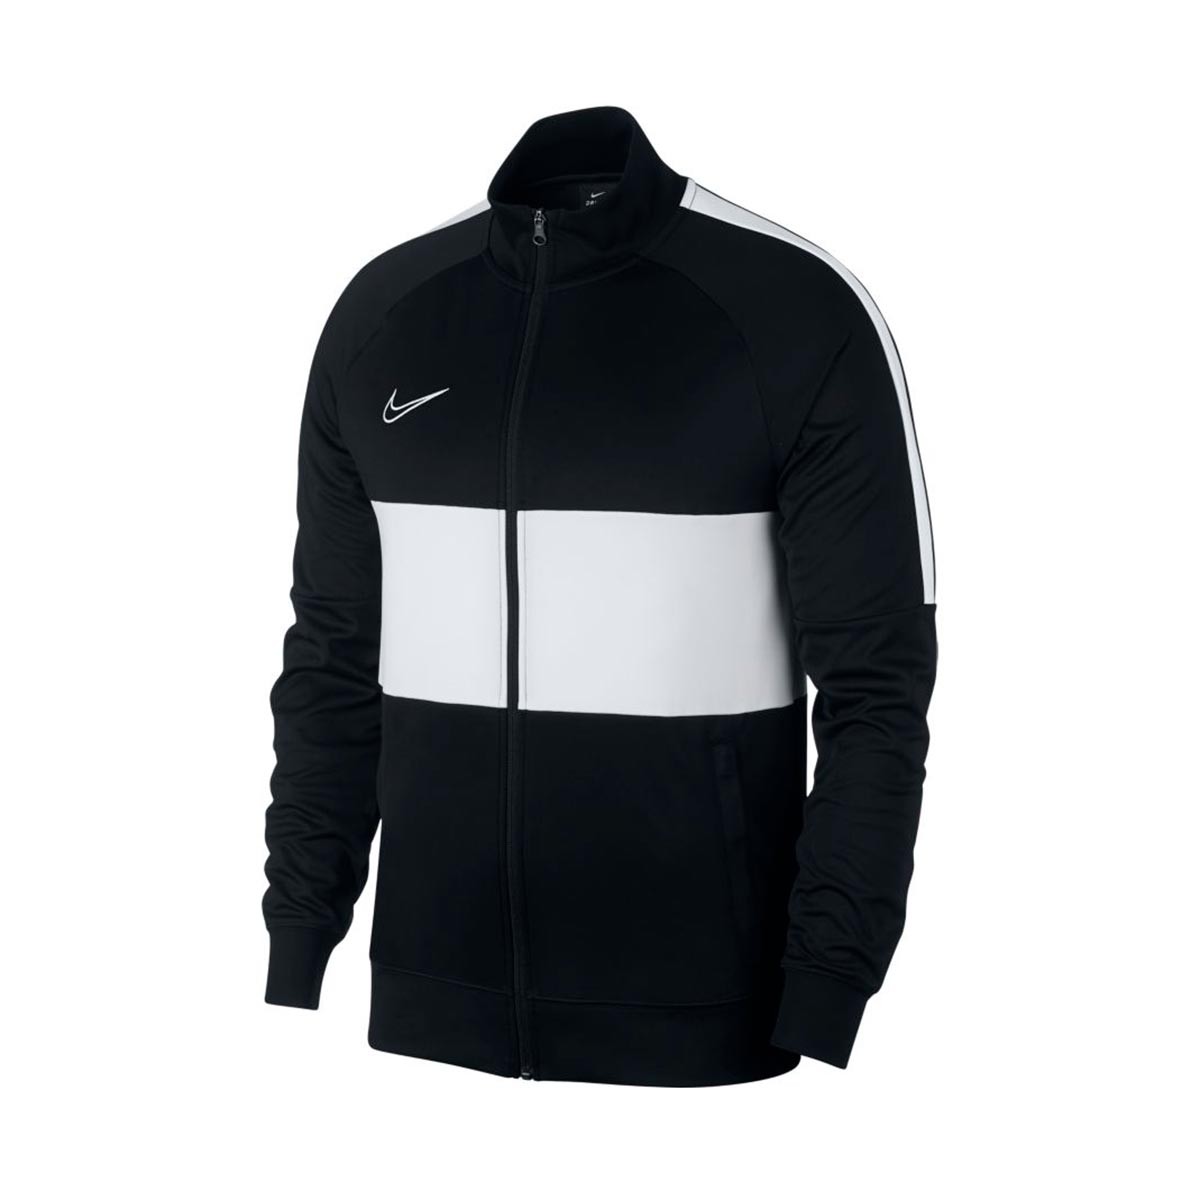 Chaqueta Nike Dri-FIT Academy Black-White - Tienda de fútbol Fútbol Emotion